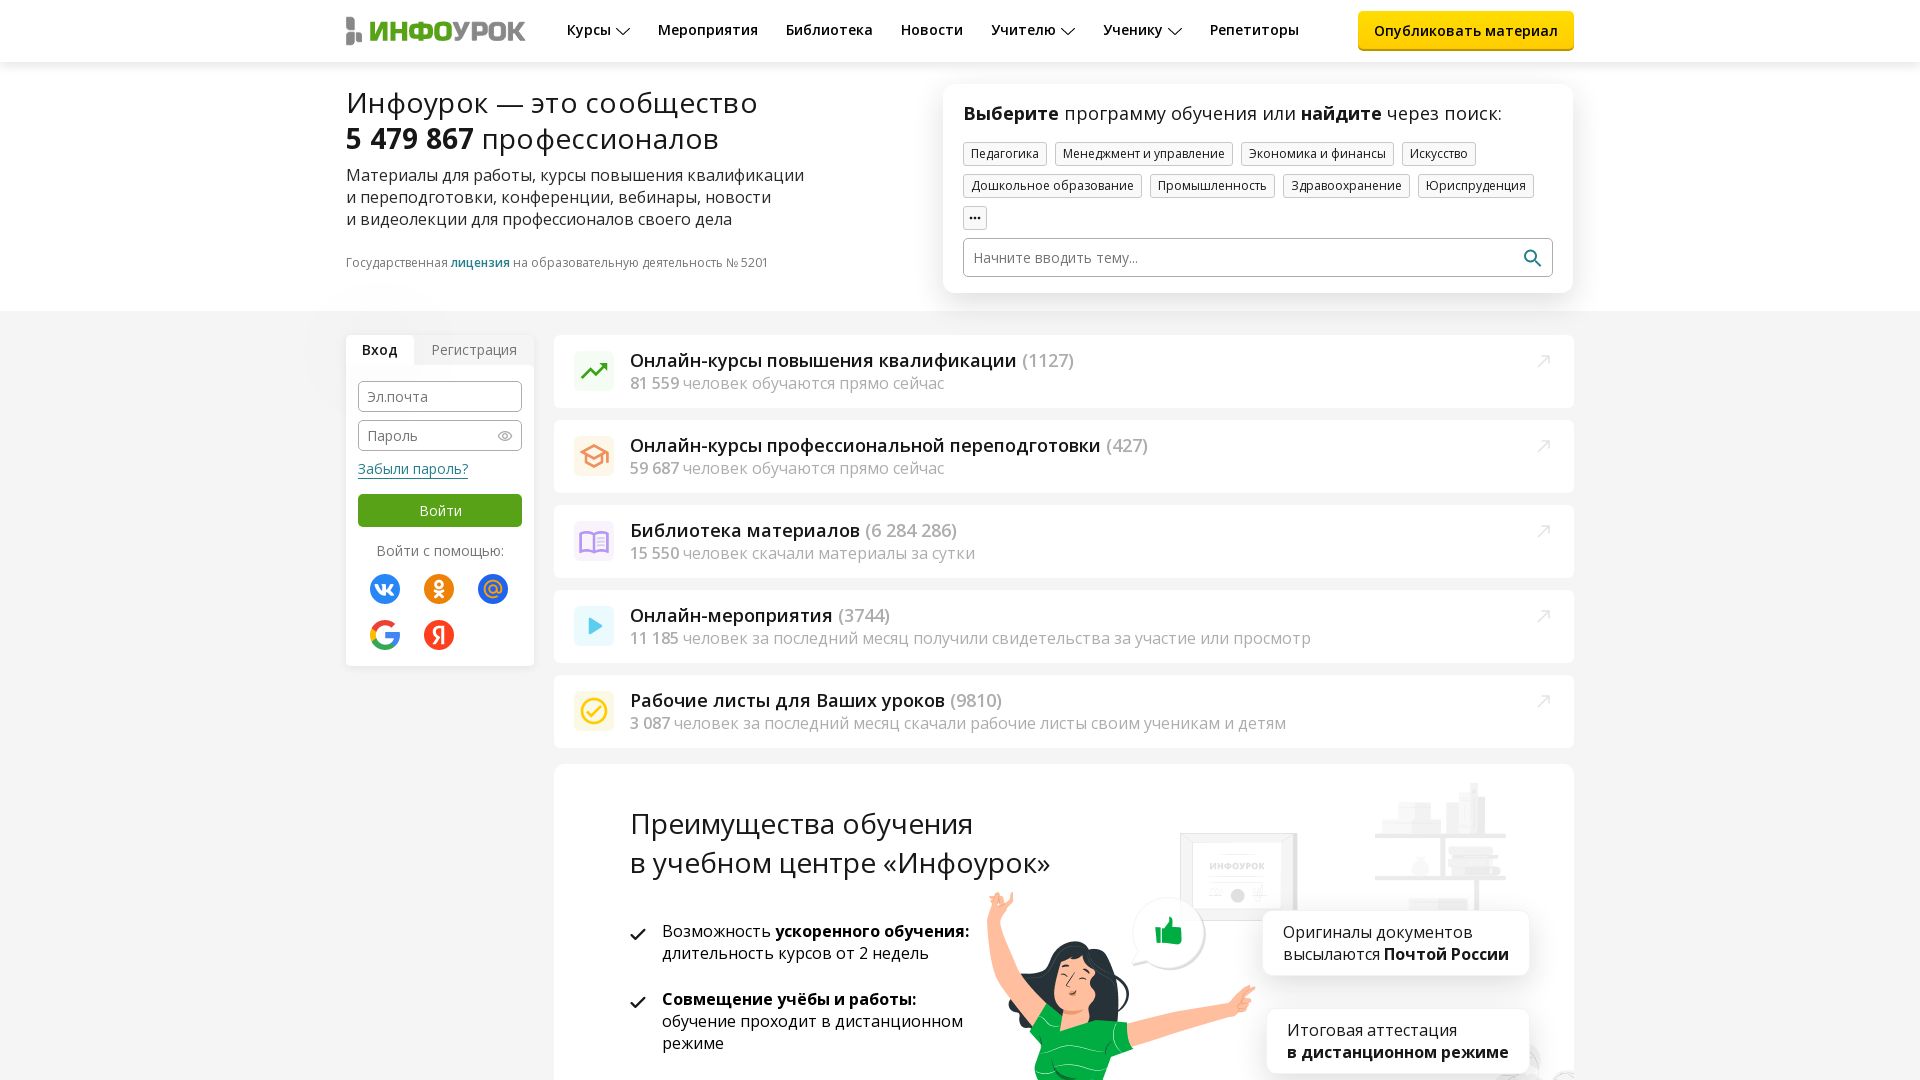 вебсайт infourok.ru Є   ONLINE